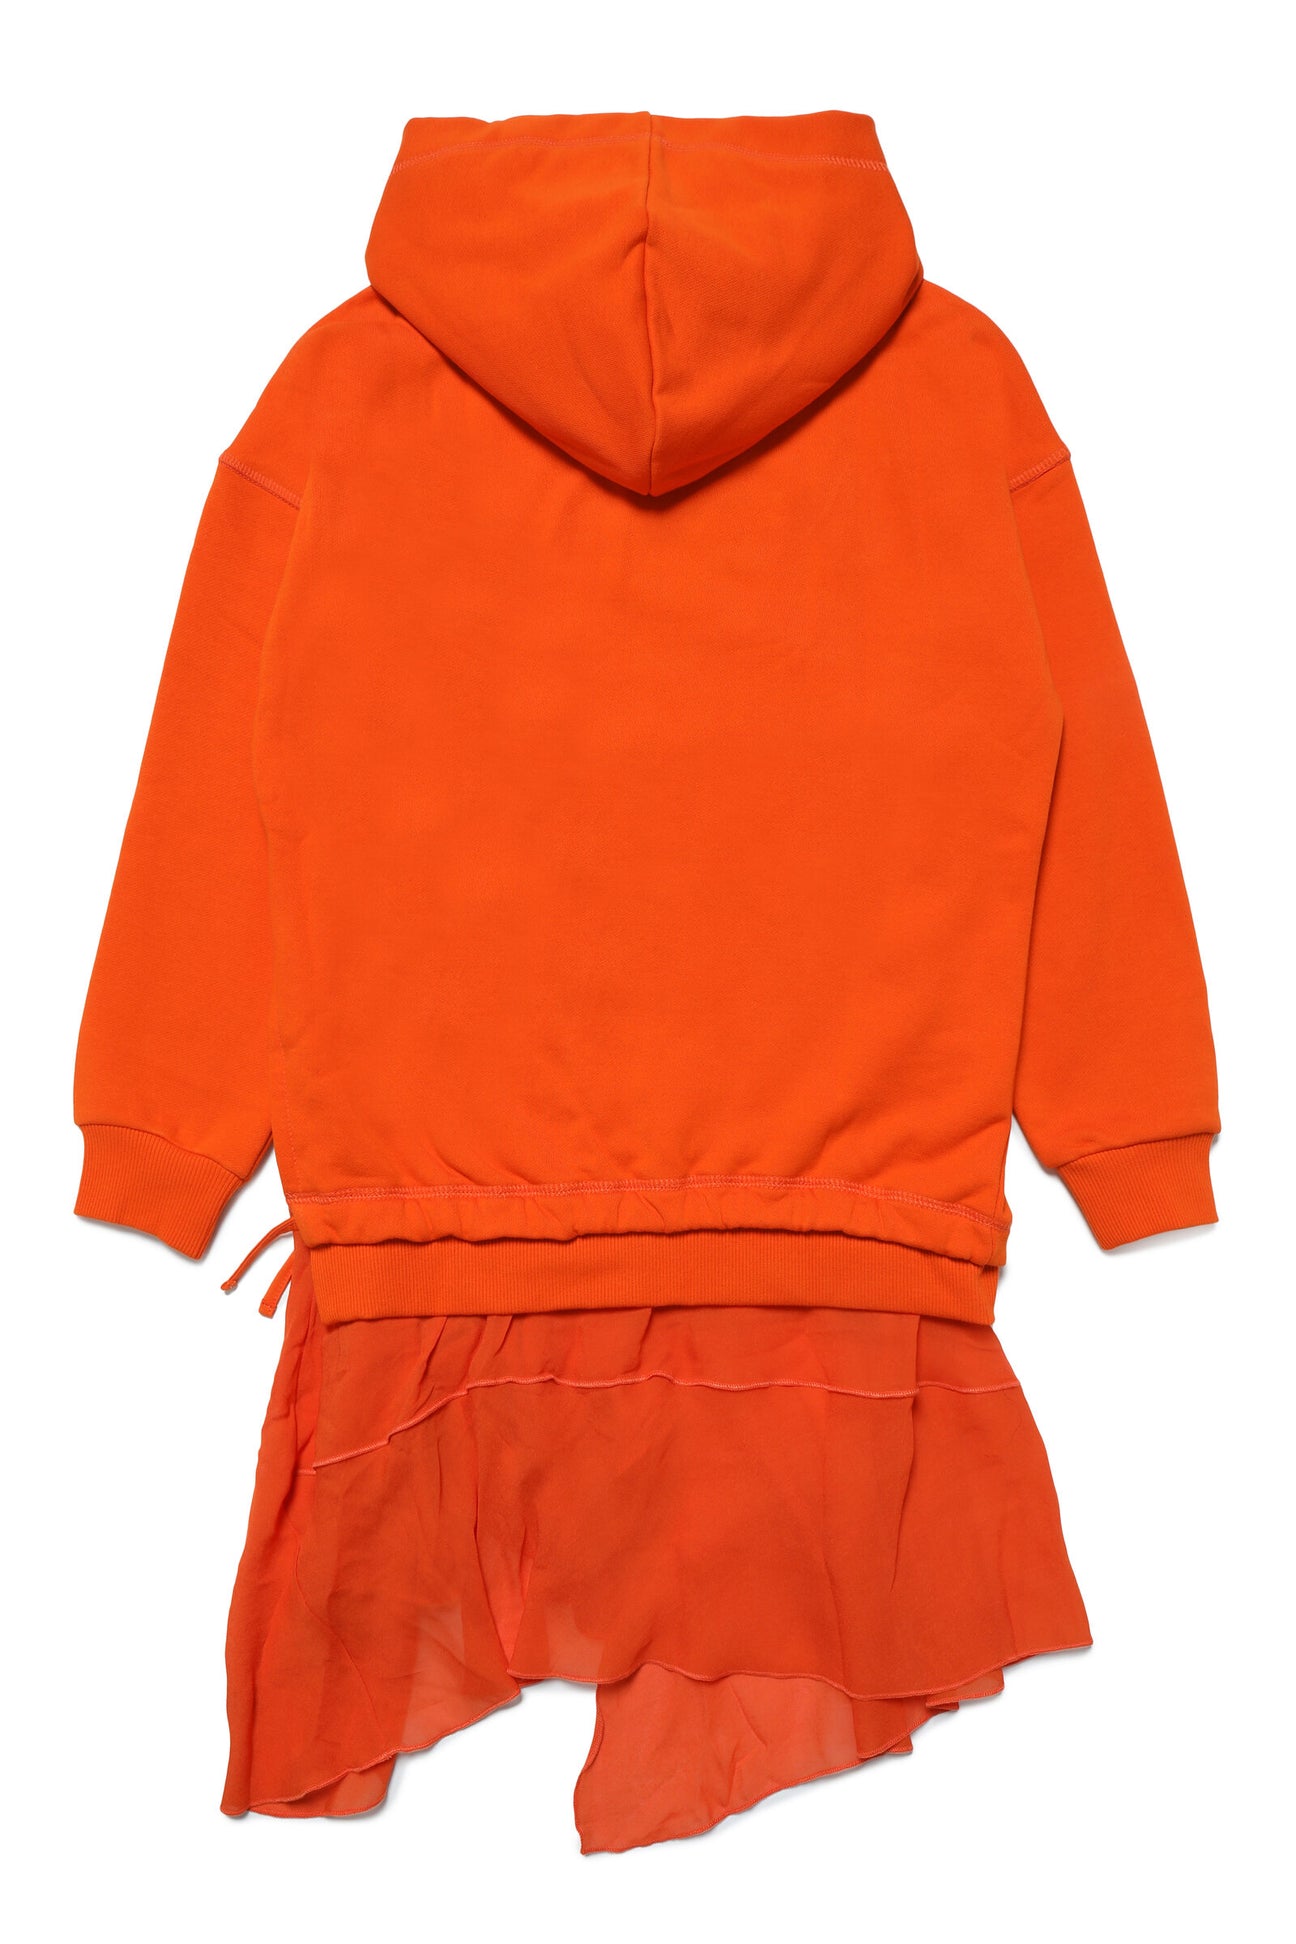 Chiffon hooded sweatshirt dress with Oval D logo Chiffon hooded sweatshirt dress with Oval D logo